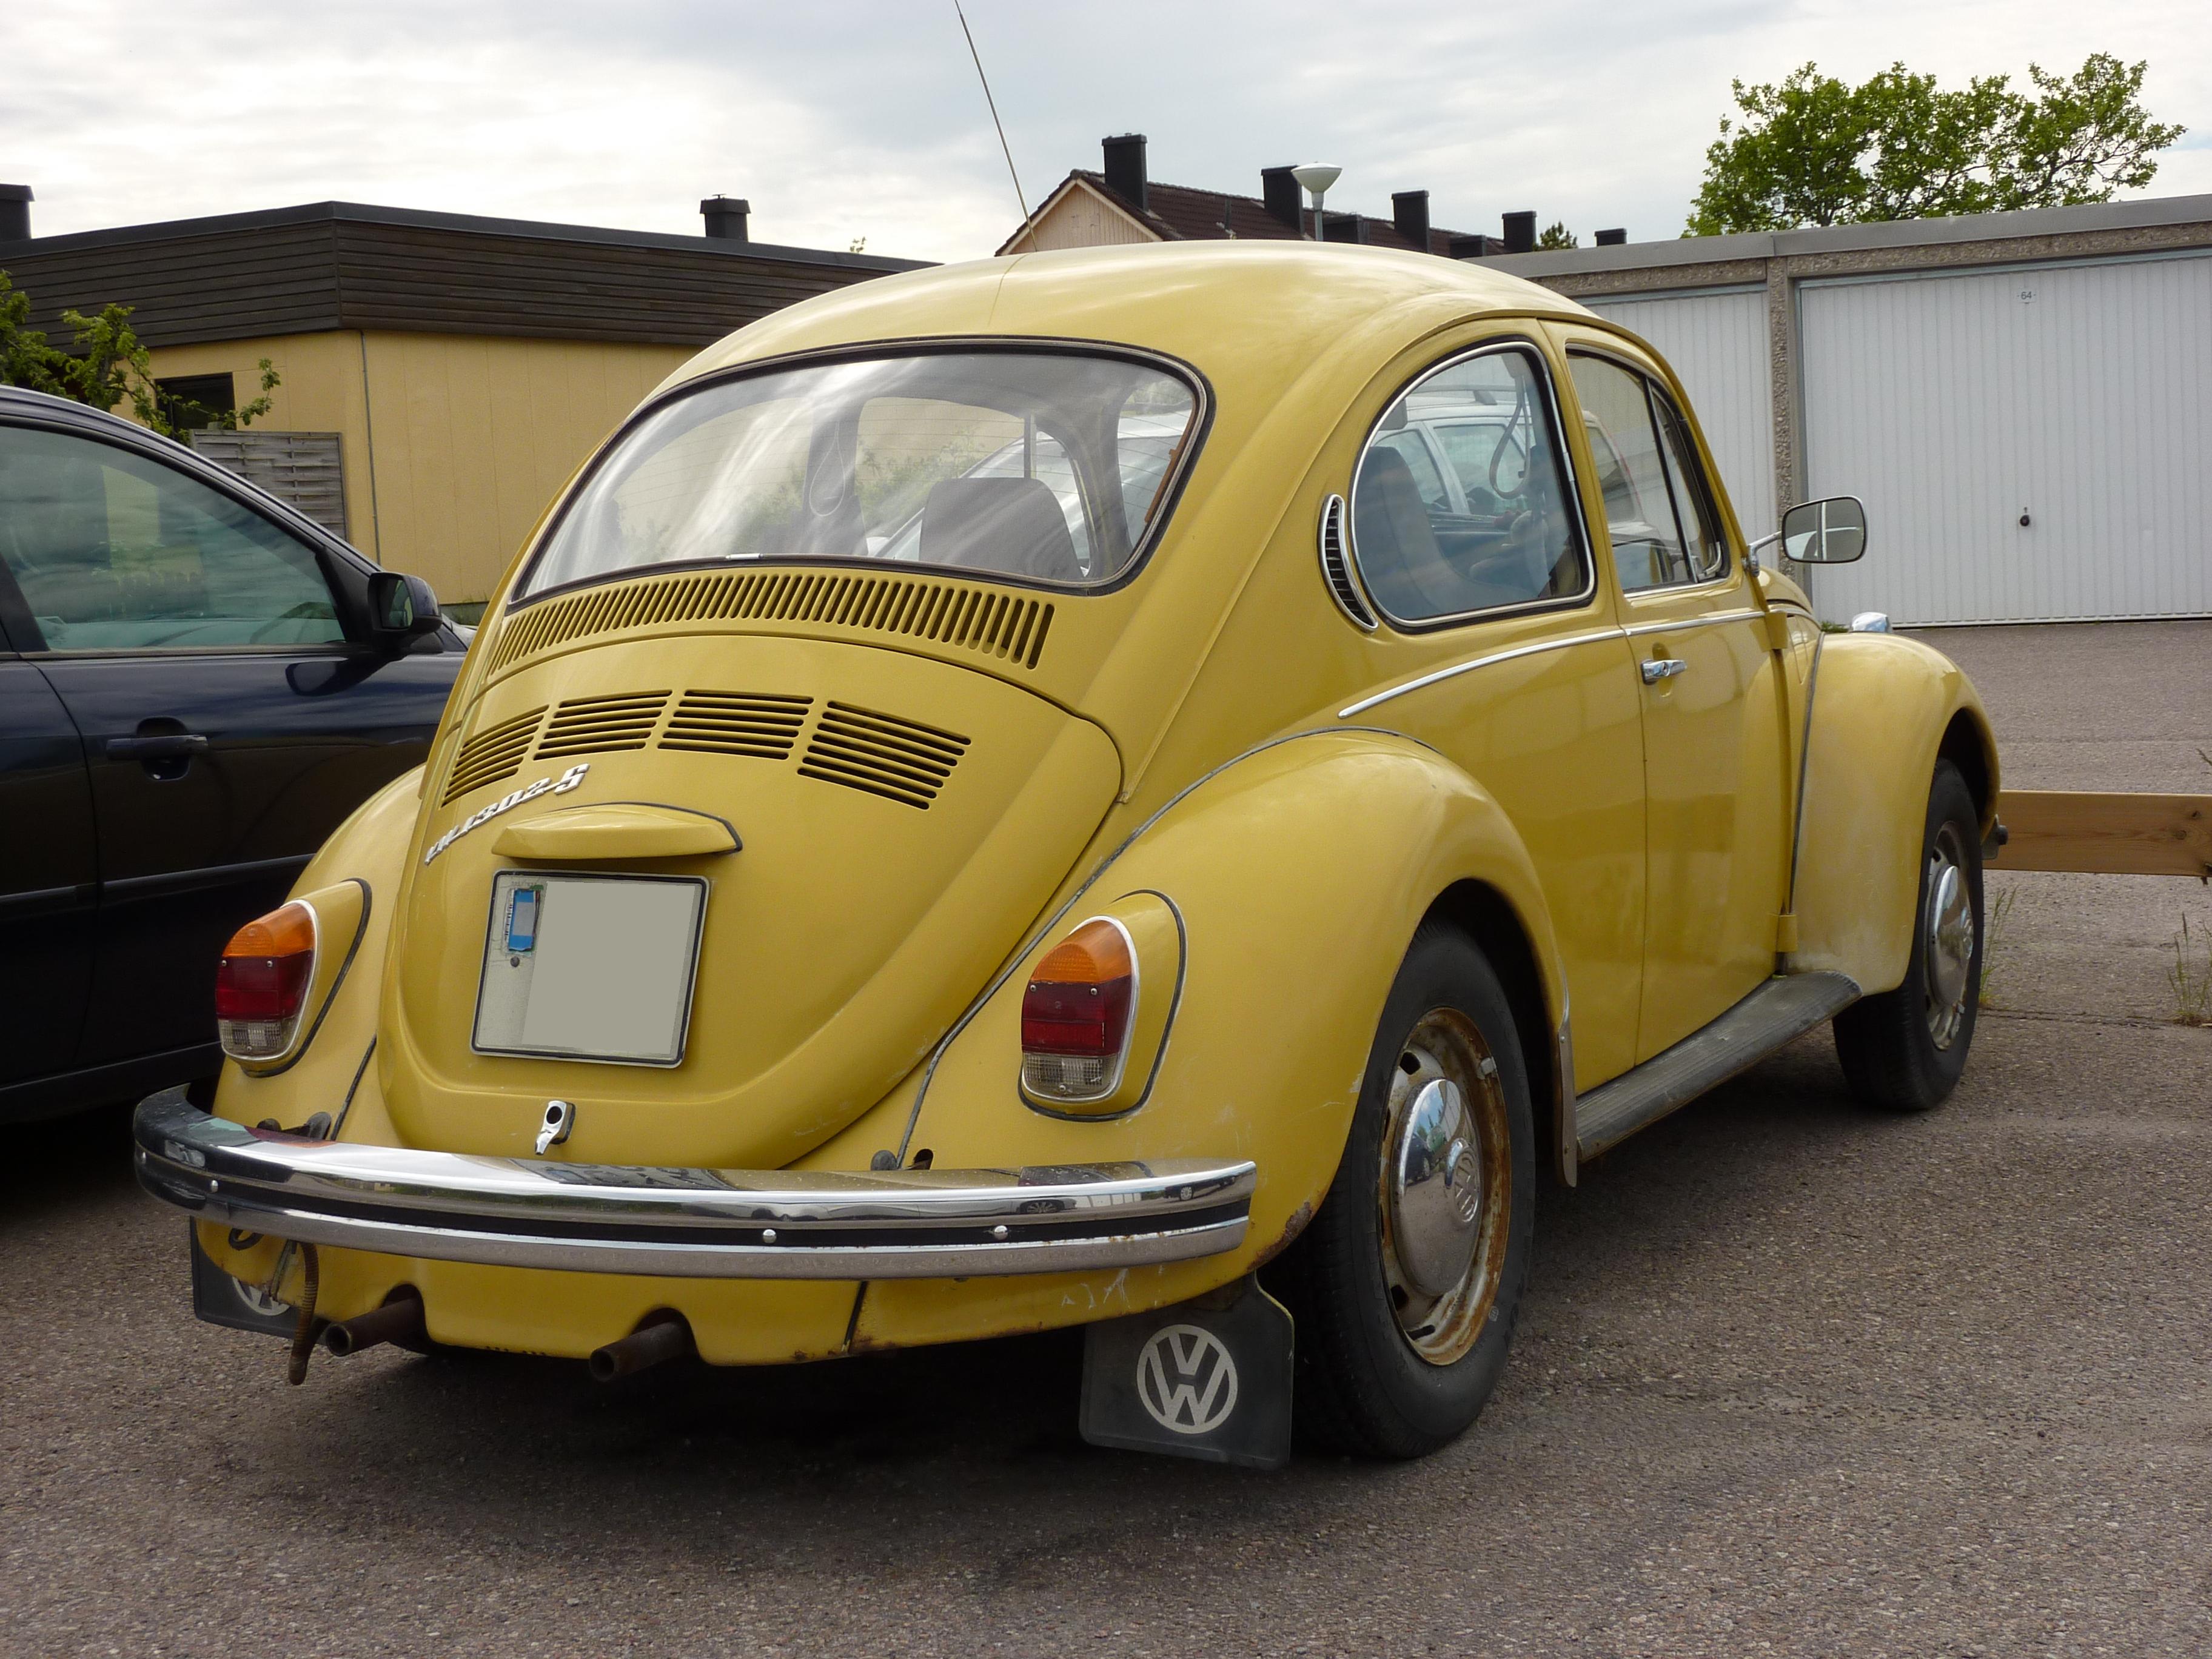 VW 1302 S 113 1972 | Flickr - Photo Sharing!